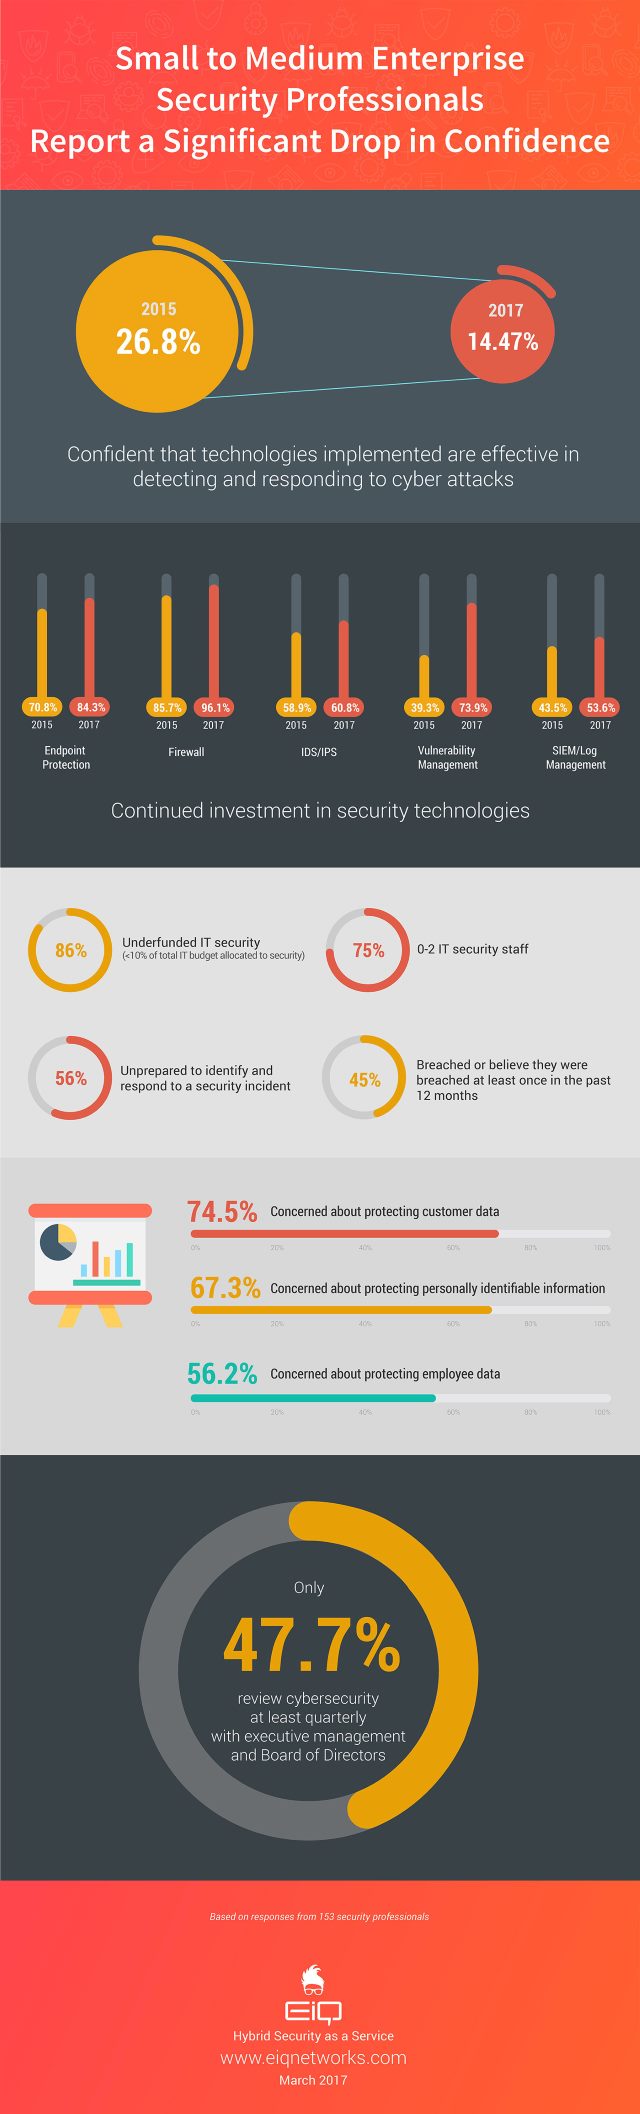 Small medium enterprise security infographic